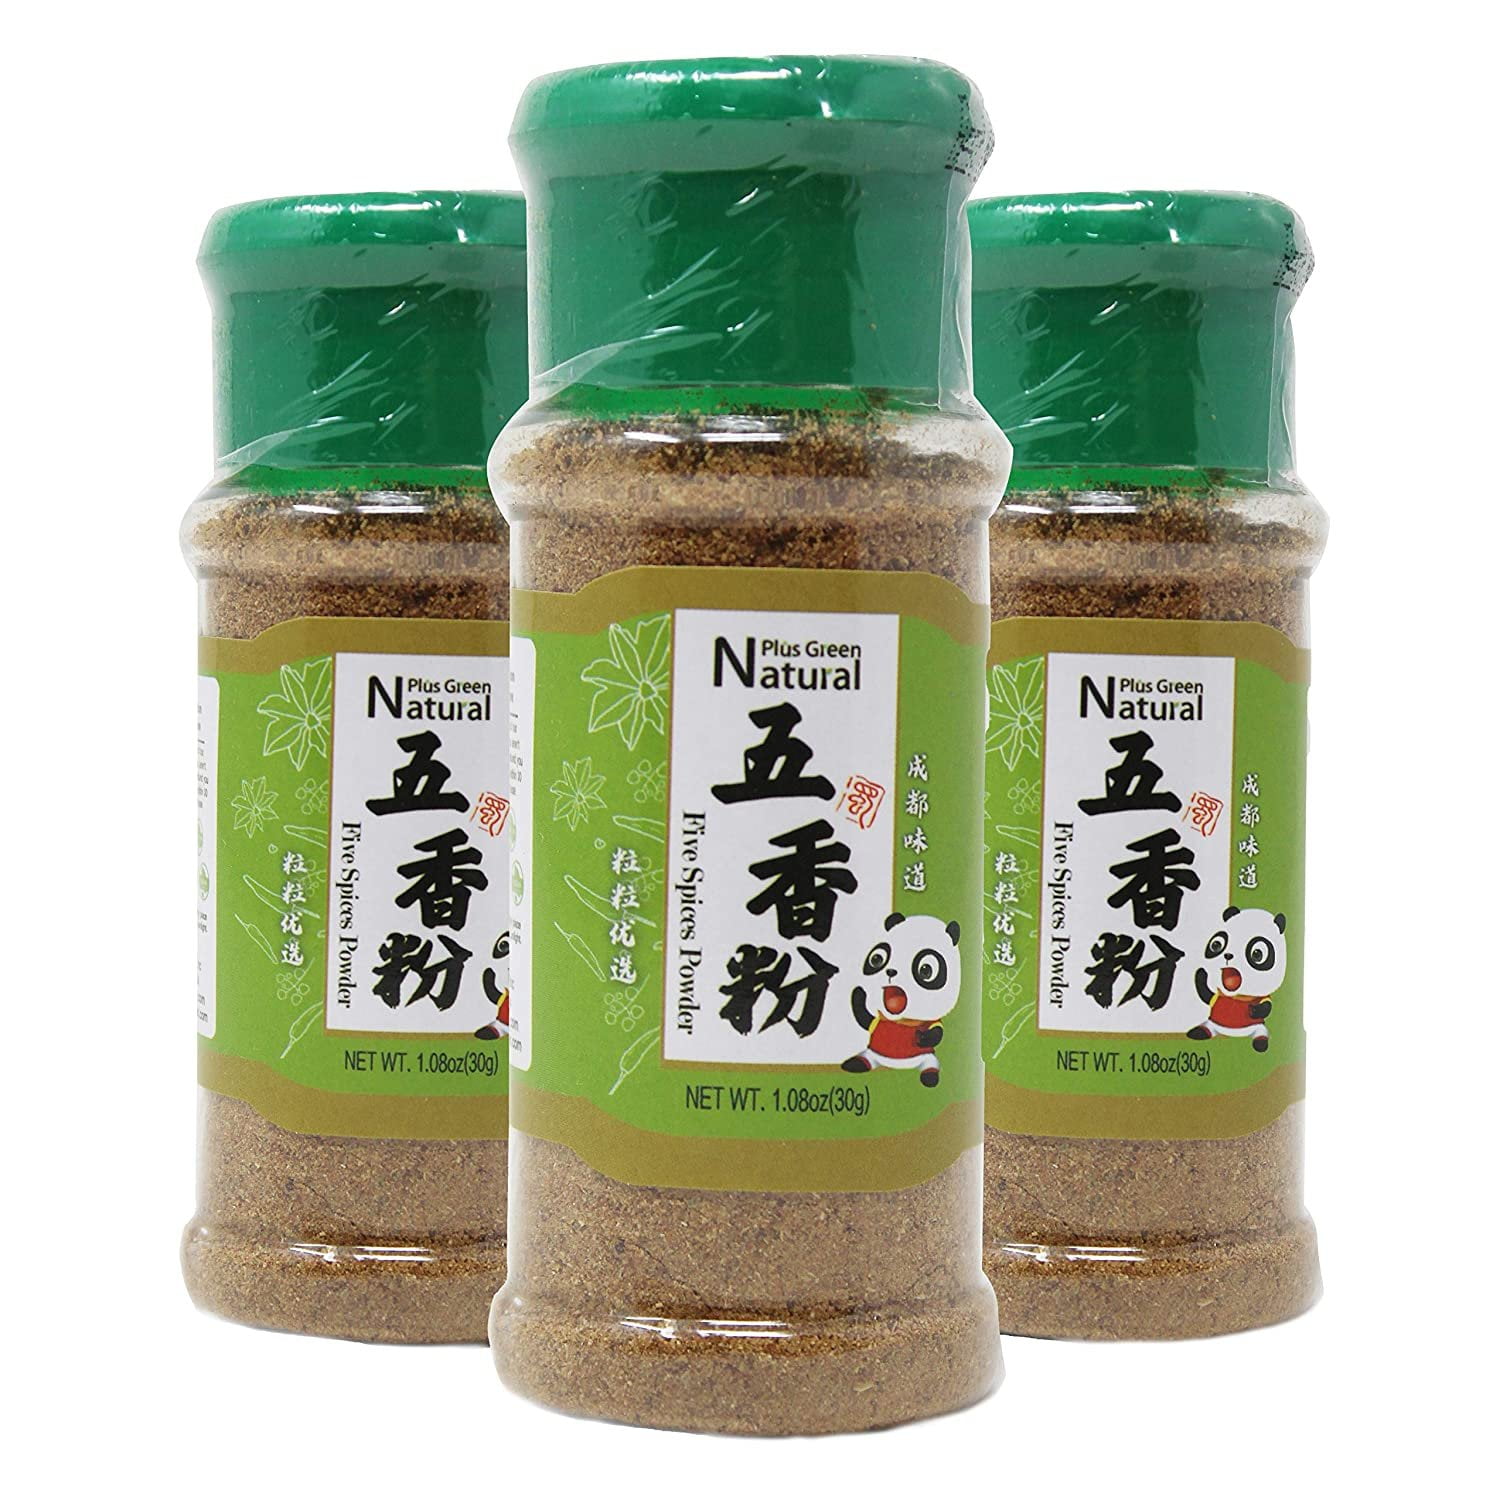 3oz Kaiulani Chinese 5 Spices - Mulvadi